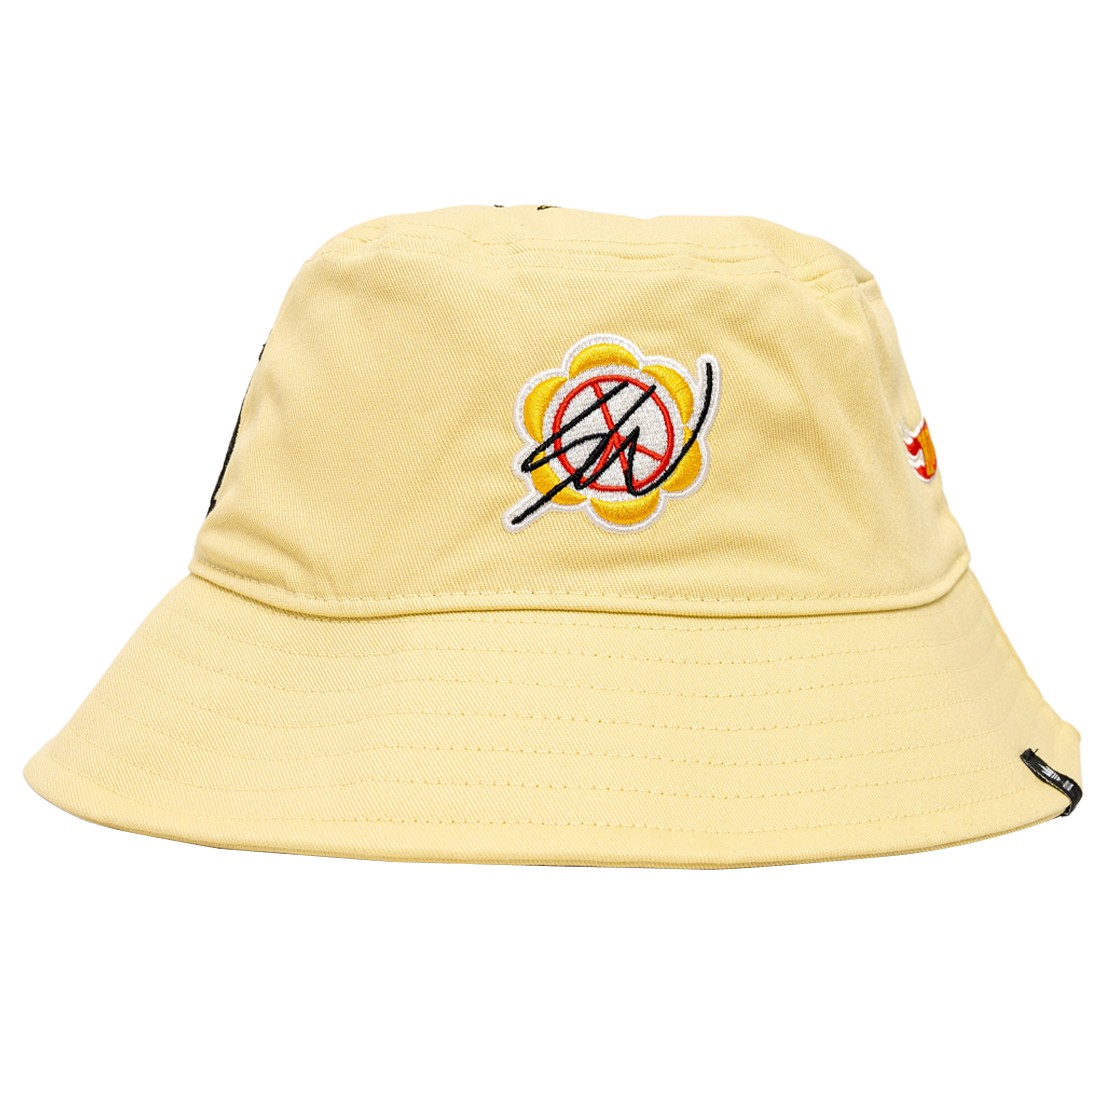 Adidas x Sean Wotherspoon x Hot Wheels Bucket Hat (yelloiw / easy yellow)